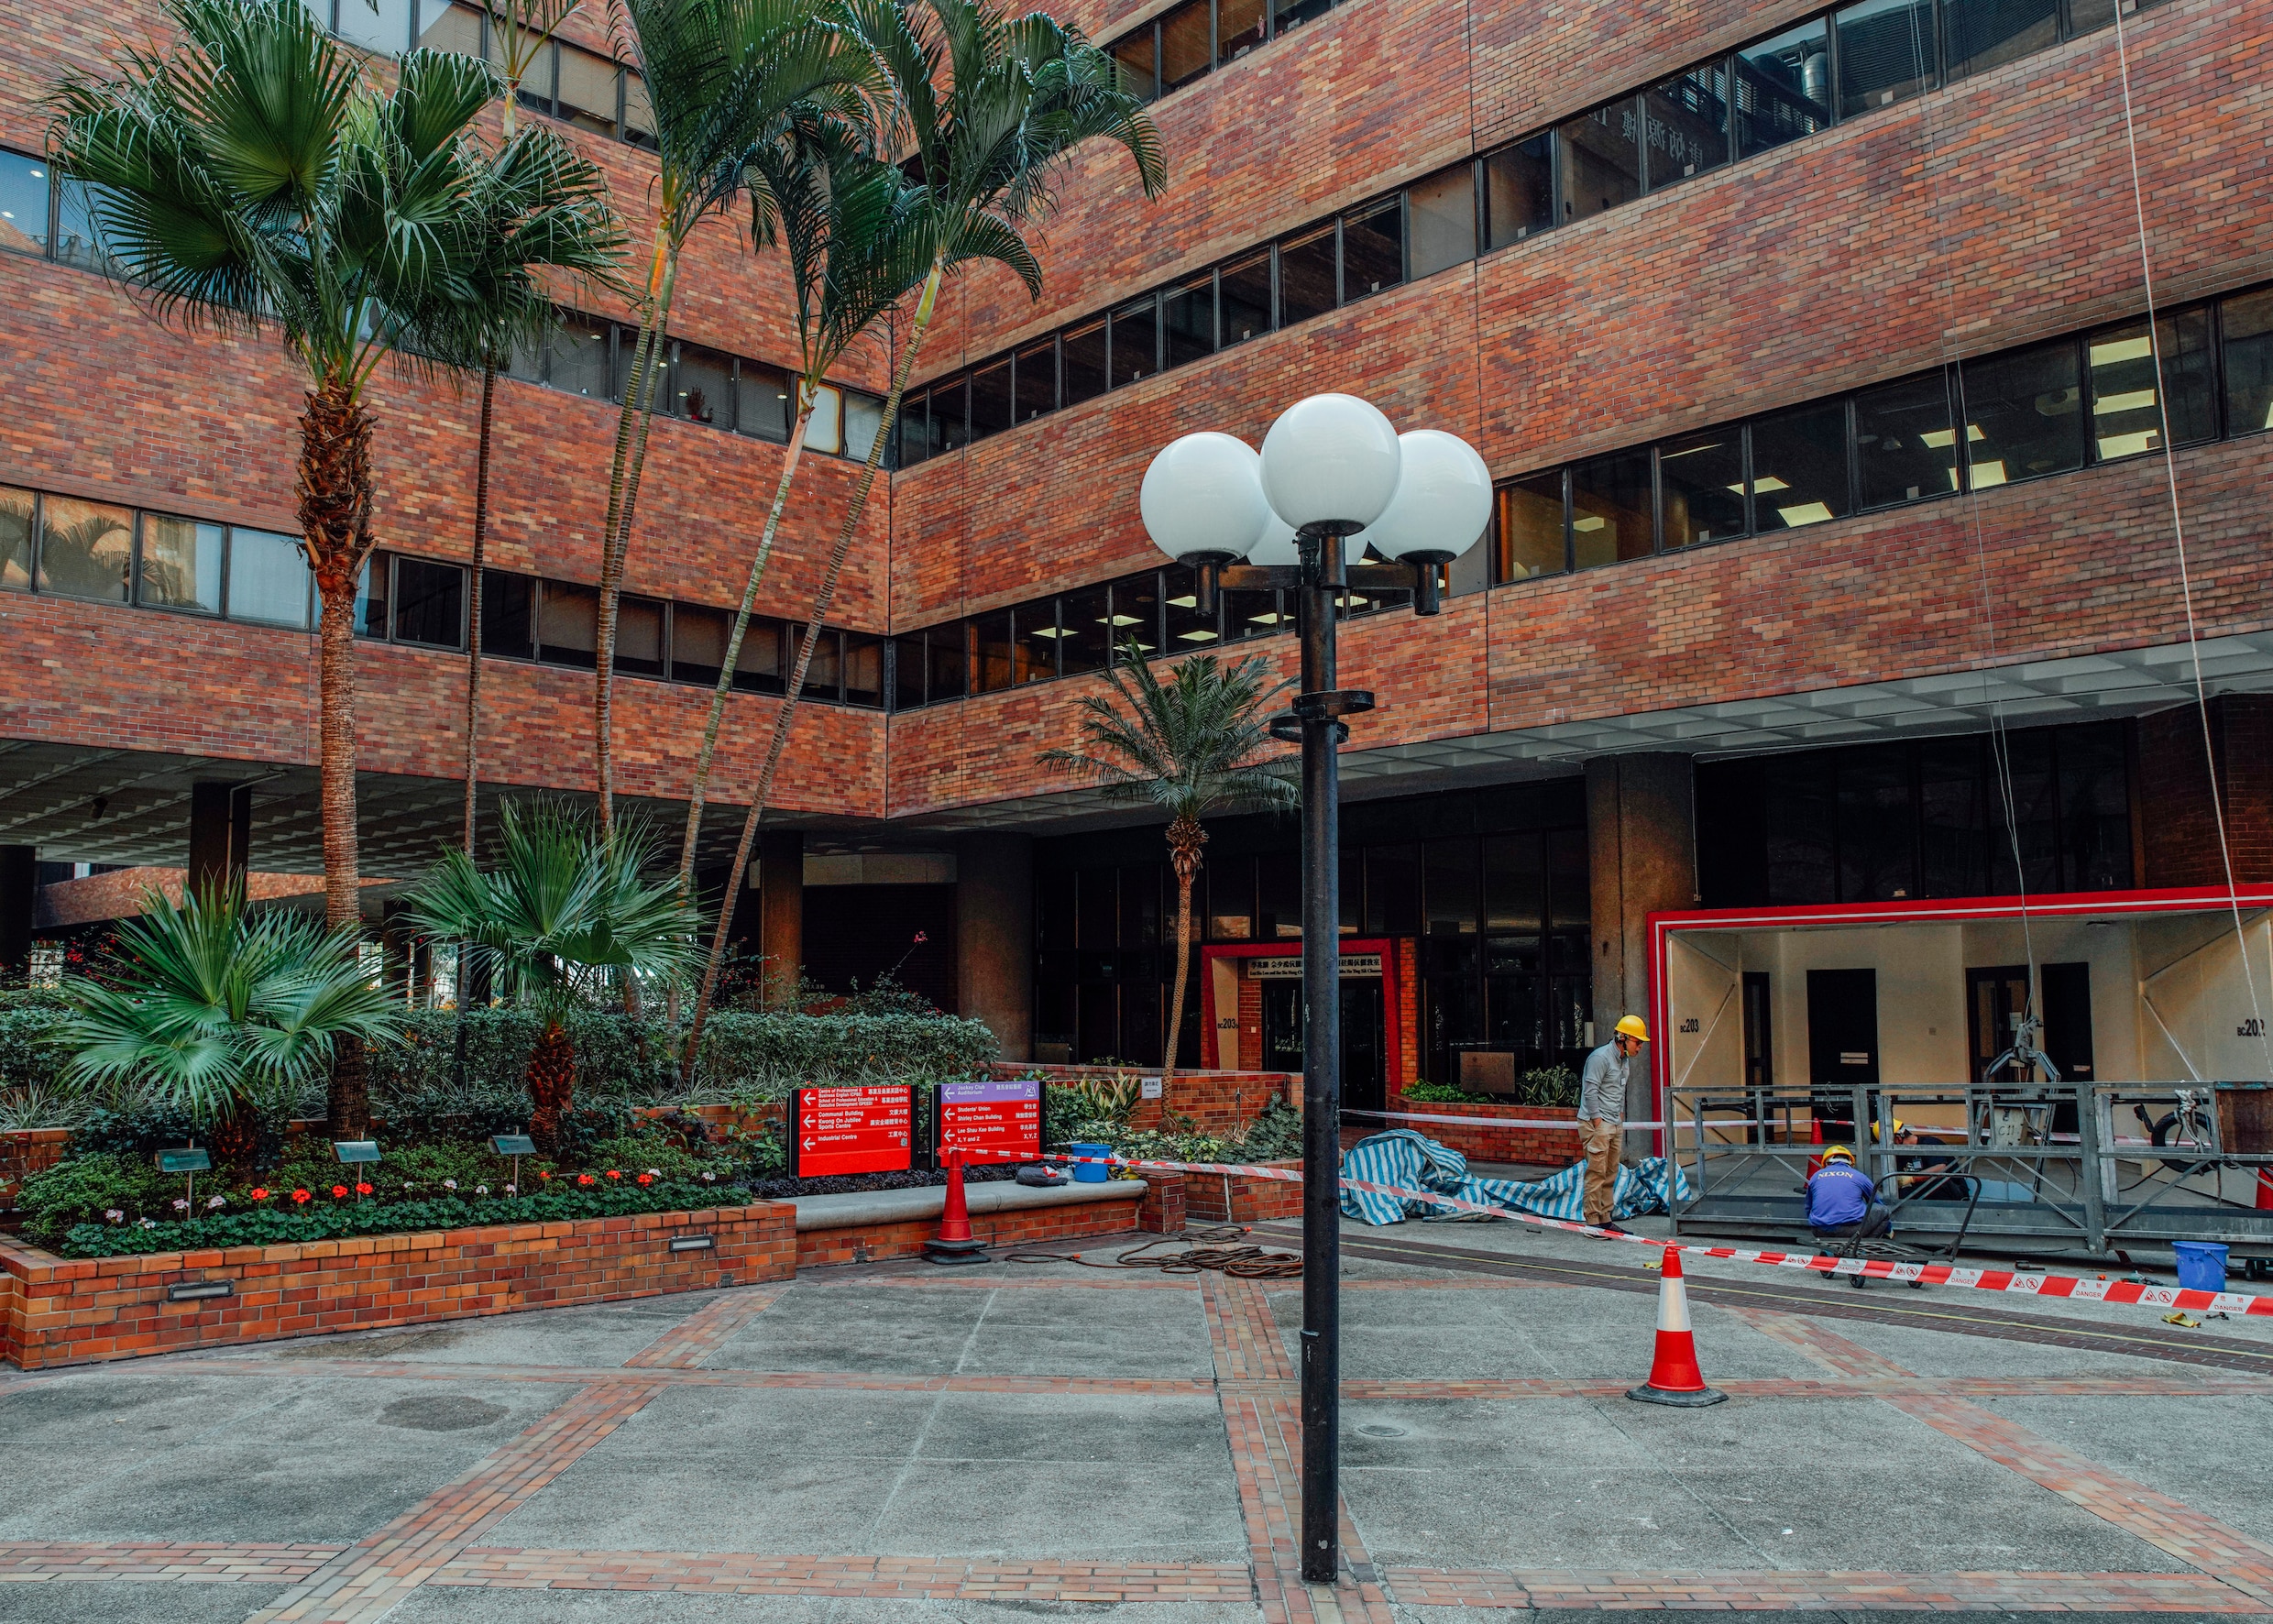 Na de veldslag, de littekens: De Morgen bezocht de ‘PolyU’-campus in Hongkong